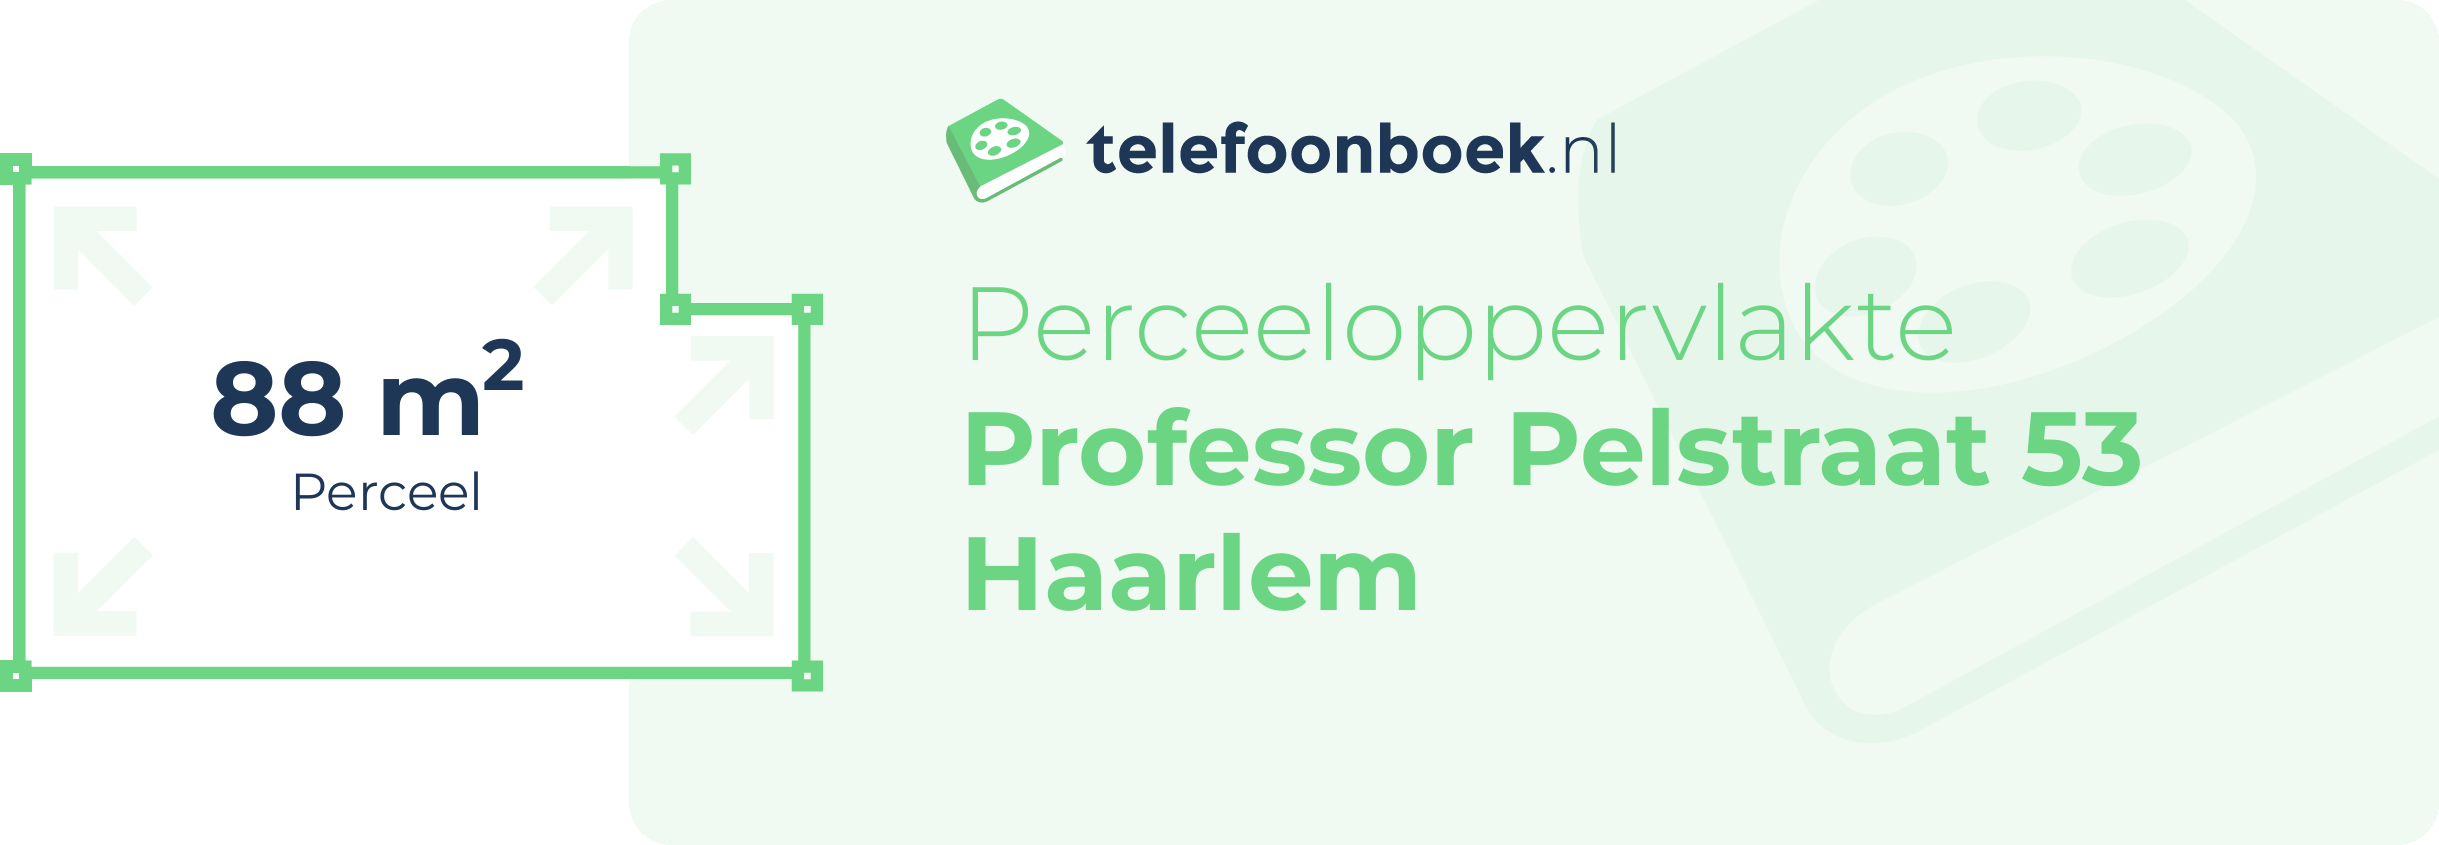 Perceeloppervlakte Professor Pelstraat 53 Haarlem